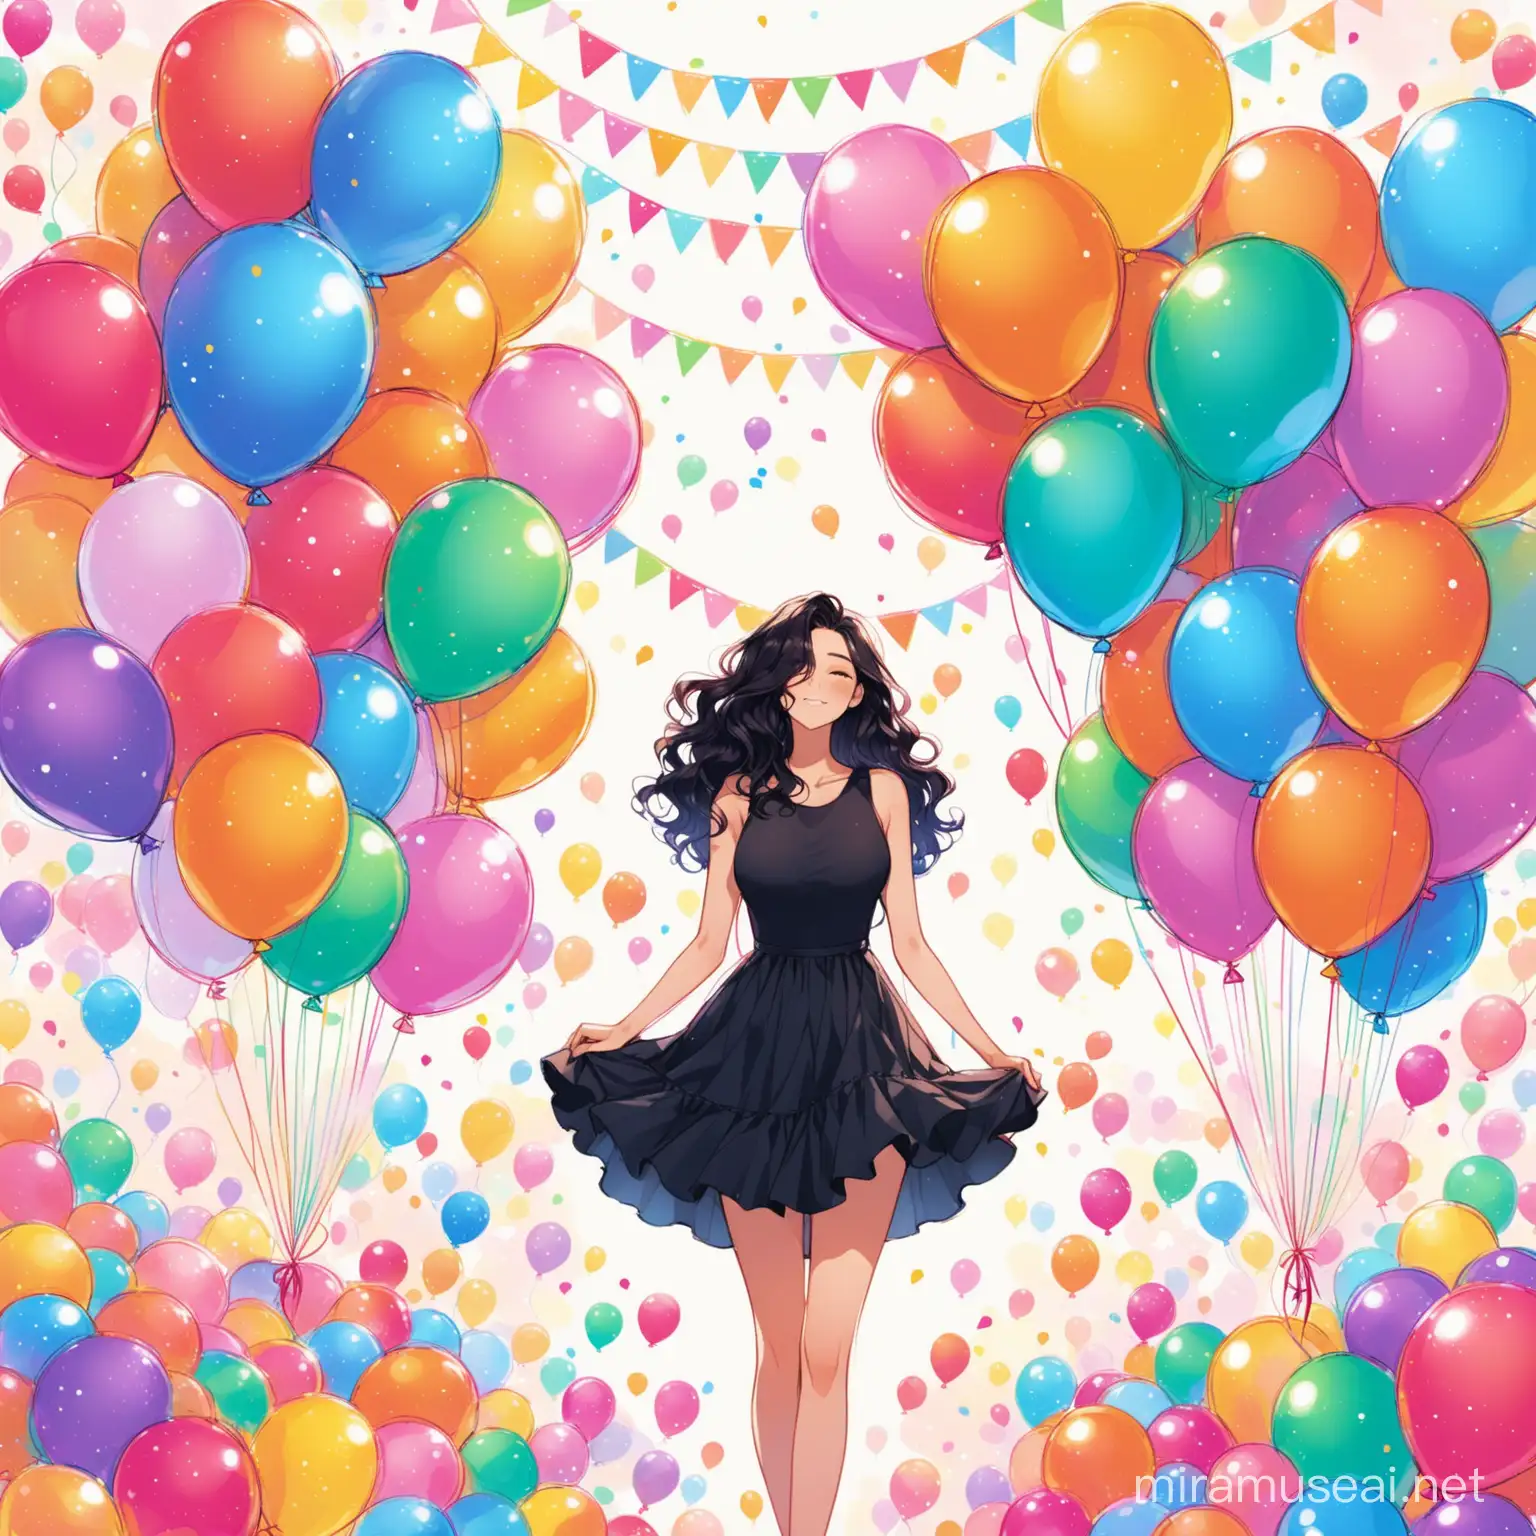 Celebrating Birthday with Tall Women Dark Wavy Hair Balloons and Flowers